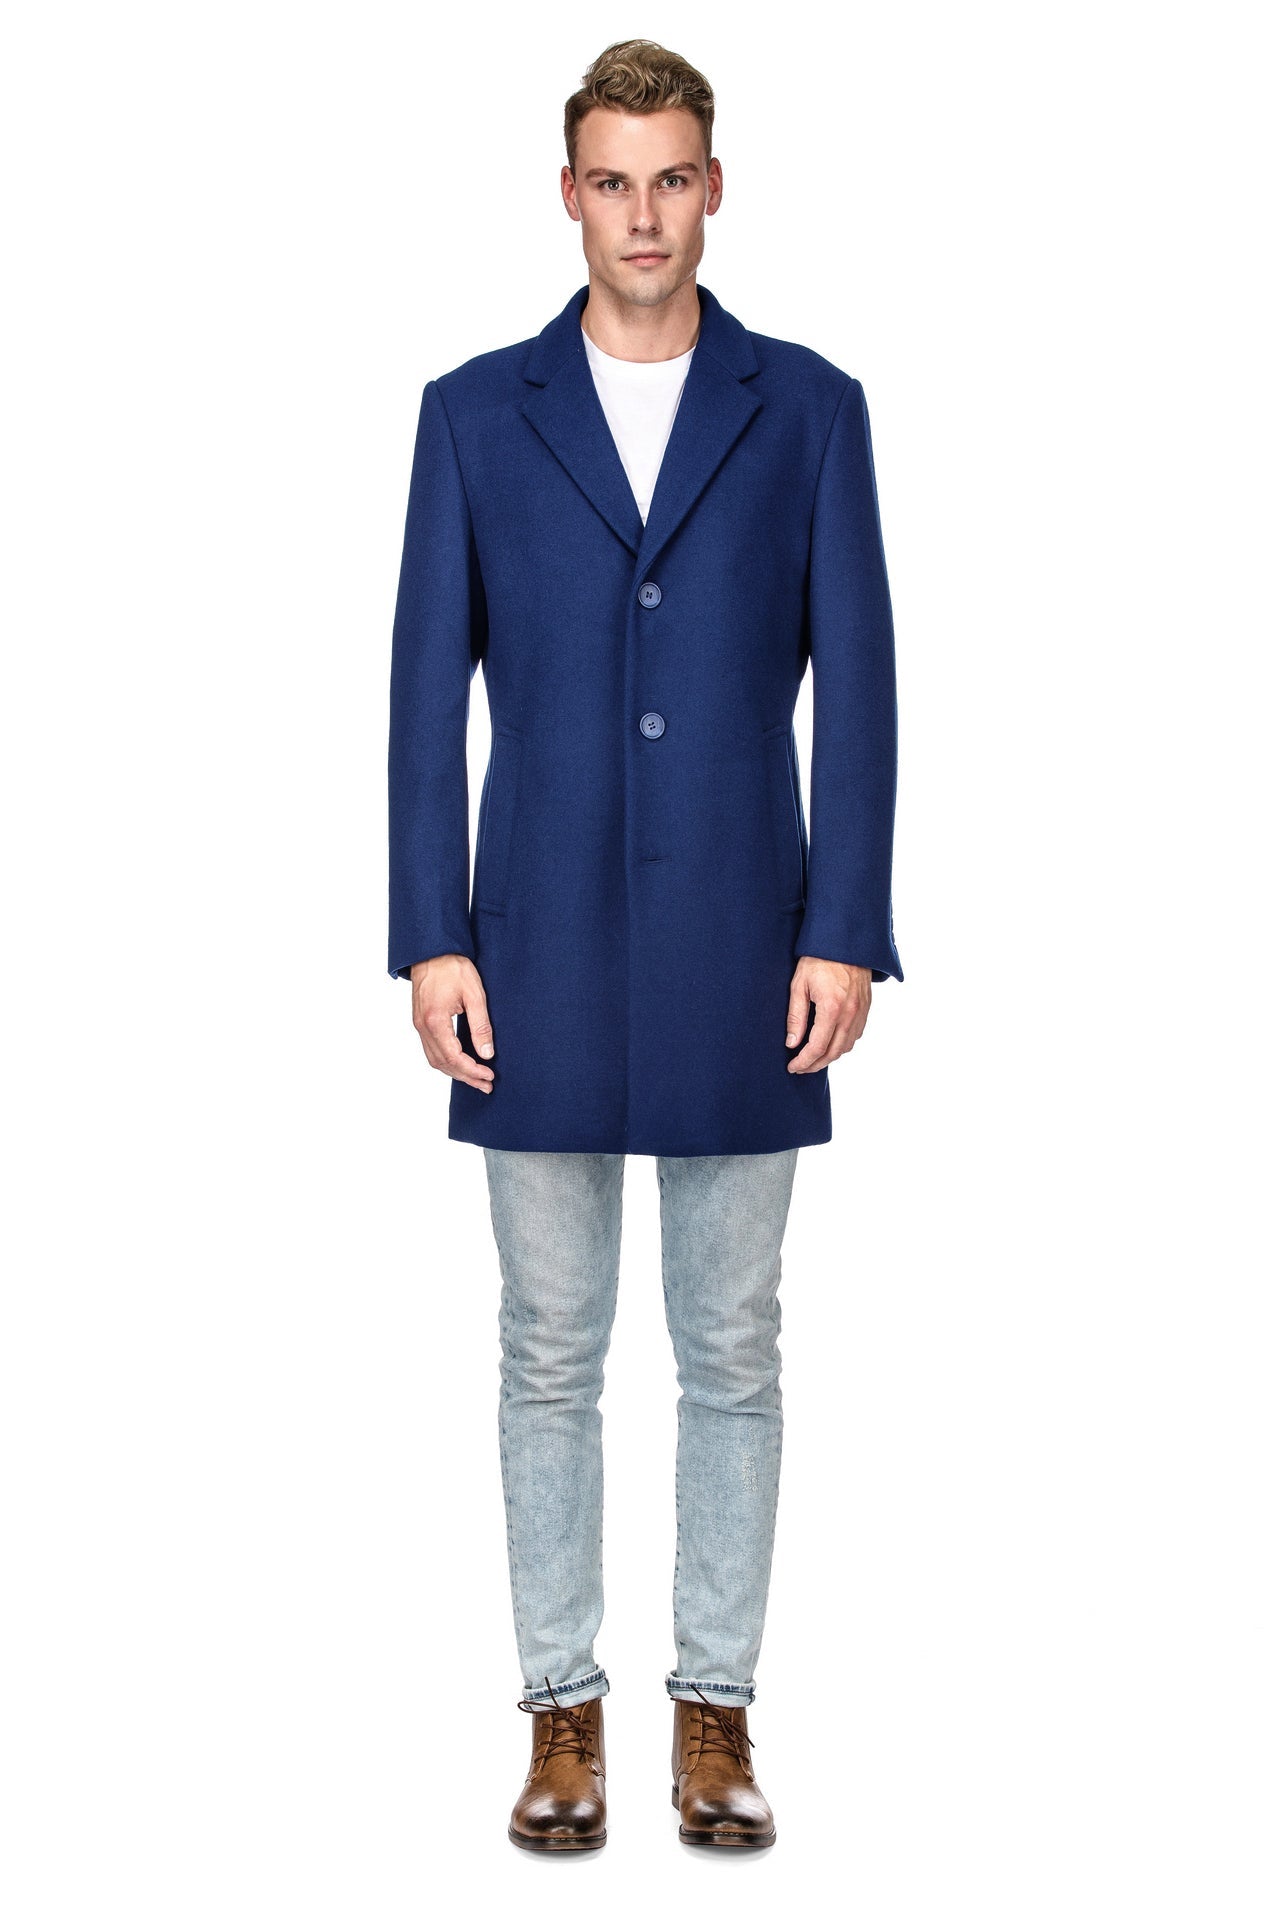 Men's Tailored Wool Blend Notch Collar Wool Blend Walker Car Coat Jacket Daily Haute